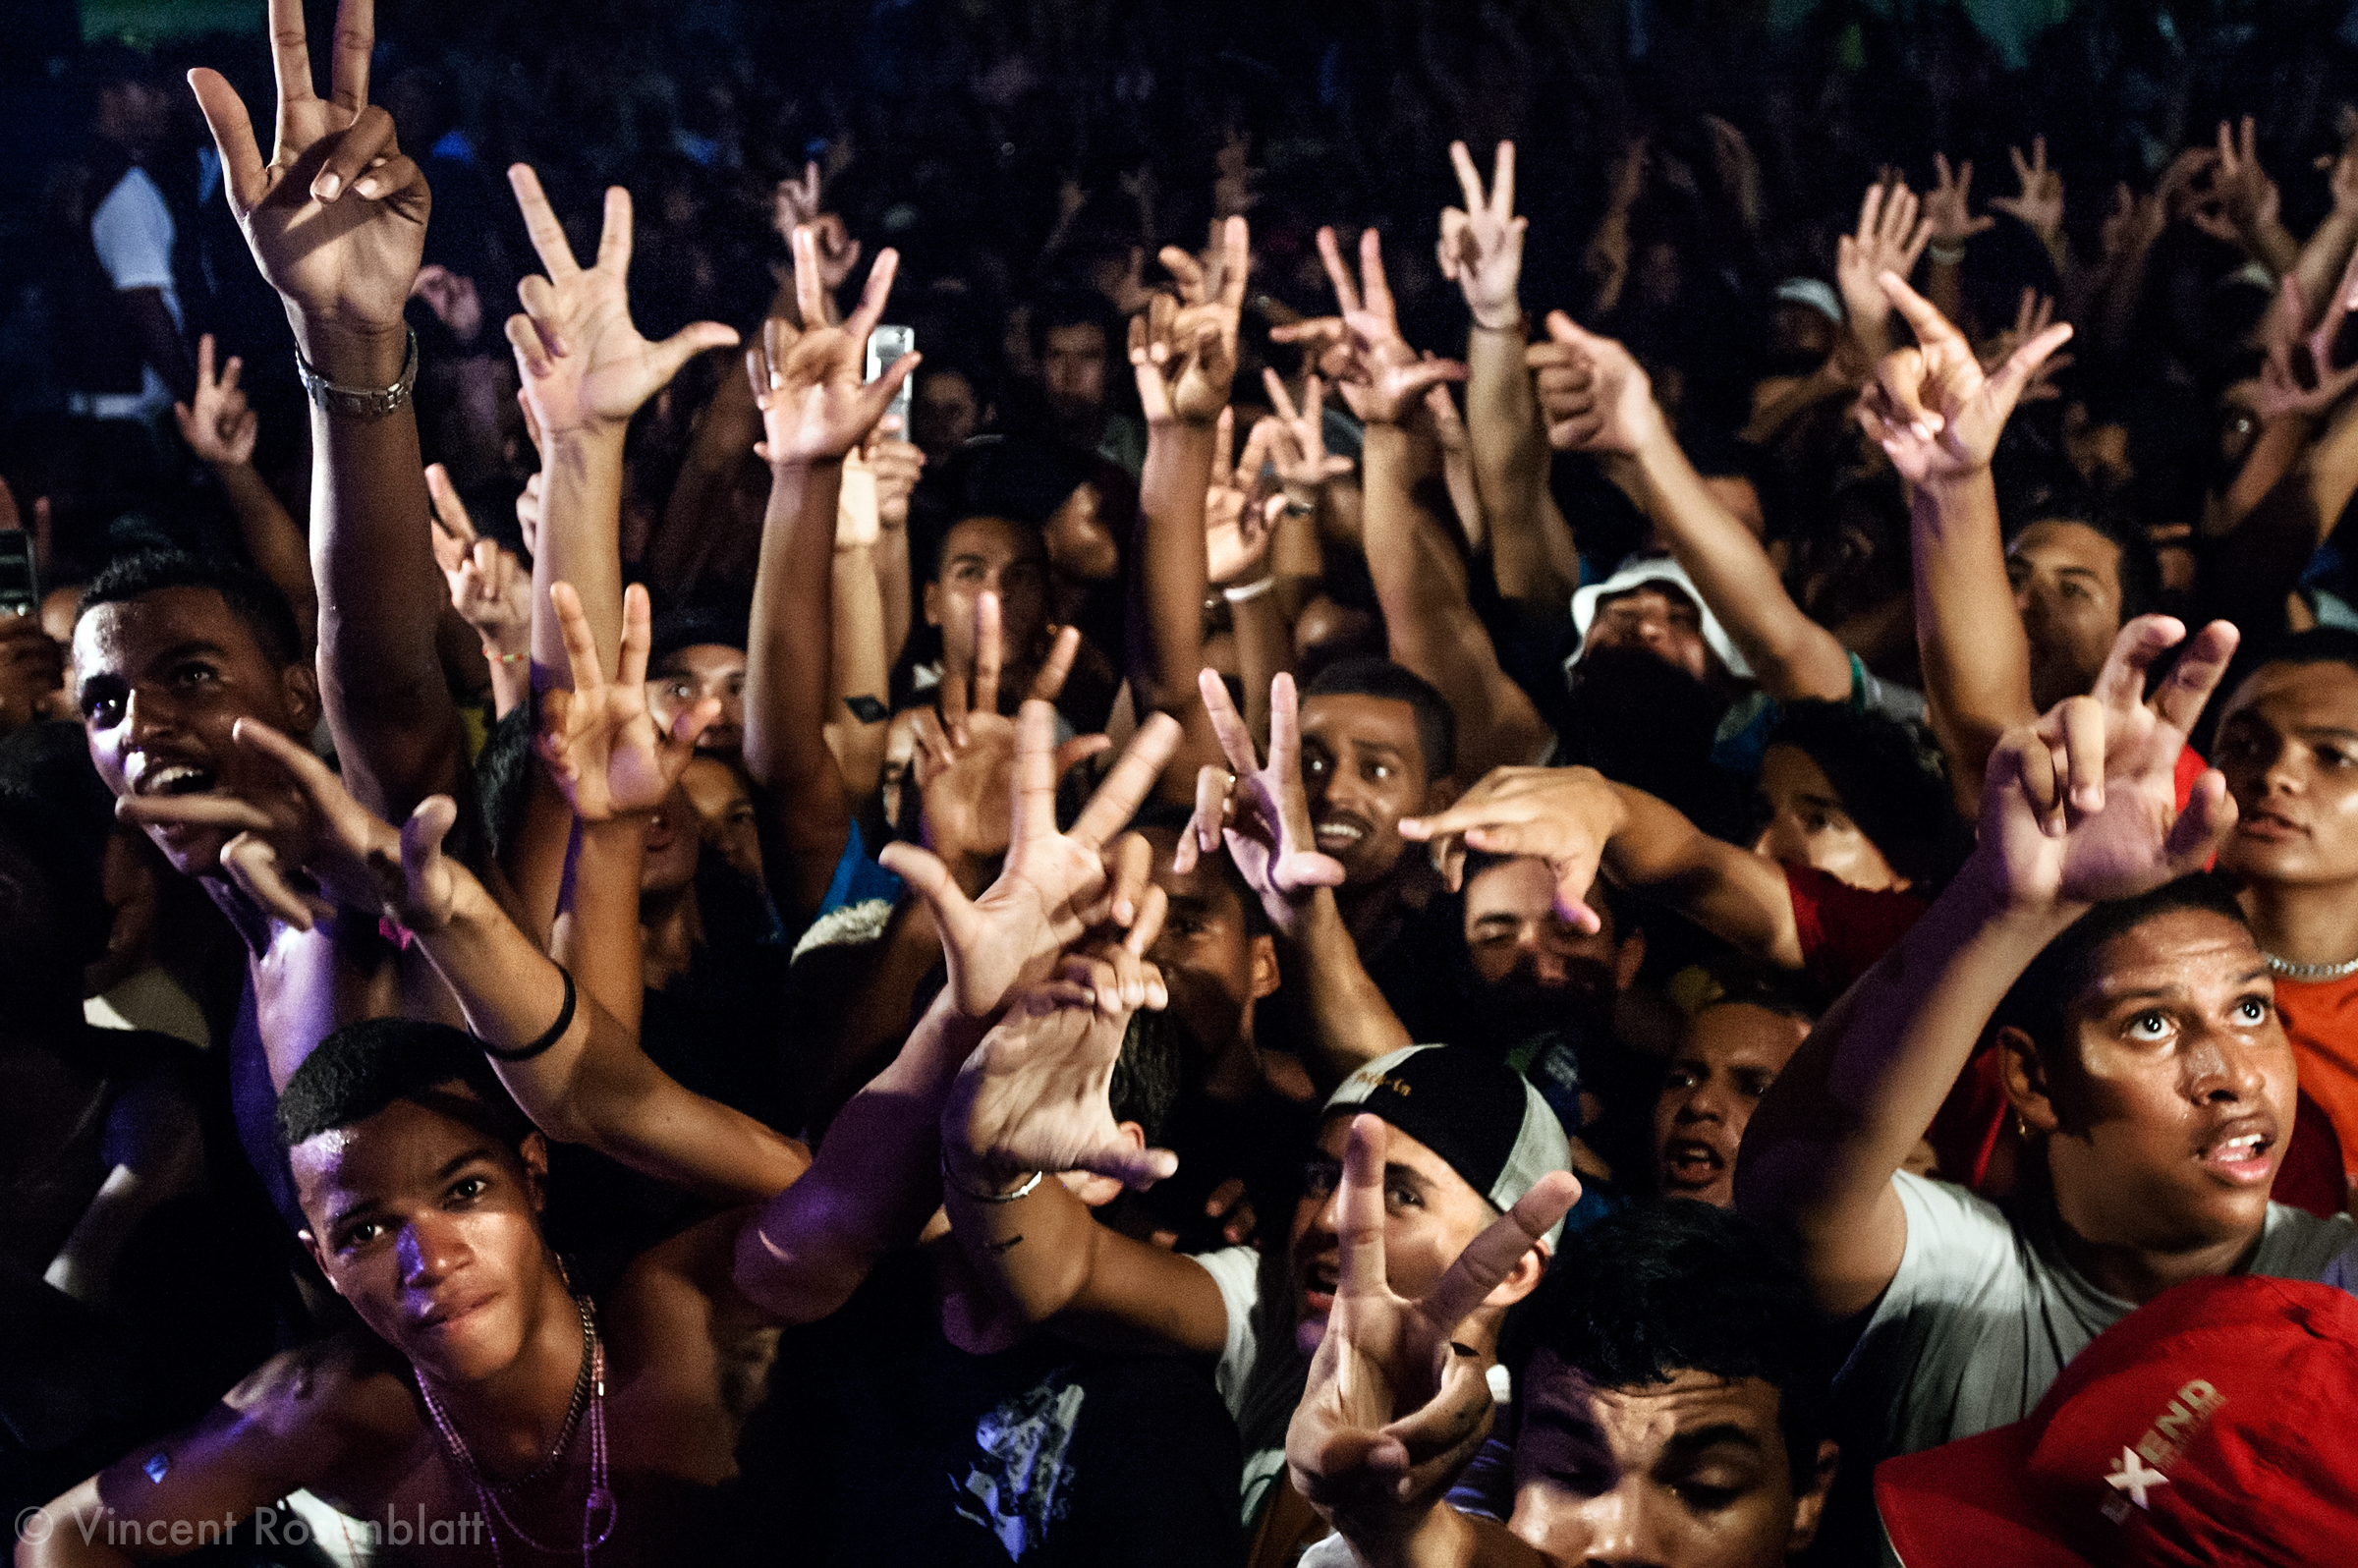  Description/Caption:
"Baile" of Furacão Tsunami, the most powerful soundsystem on the Funk scene in Rio. Club Boqueirão, downtown Rio de Janeiro . Every hand gesture has a meaning : 3 fingers apart mean "Vida louca" (crazy life), the C and V letters